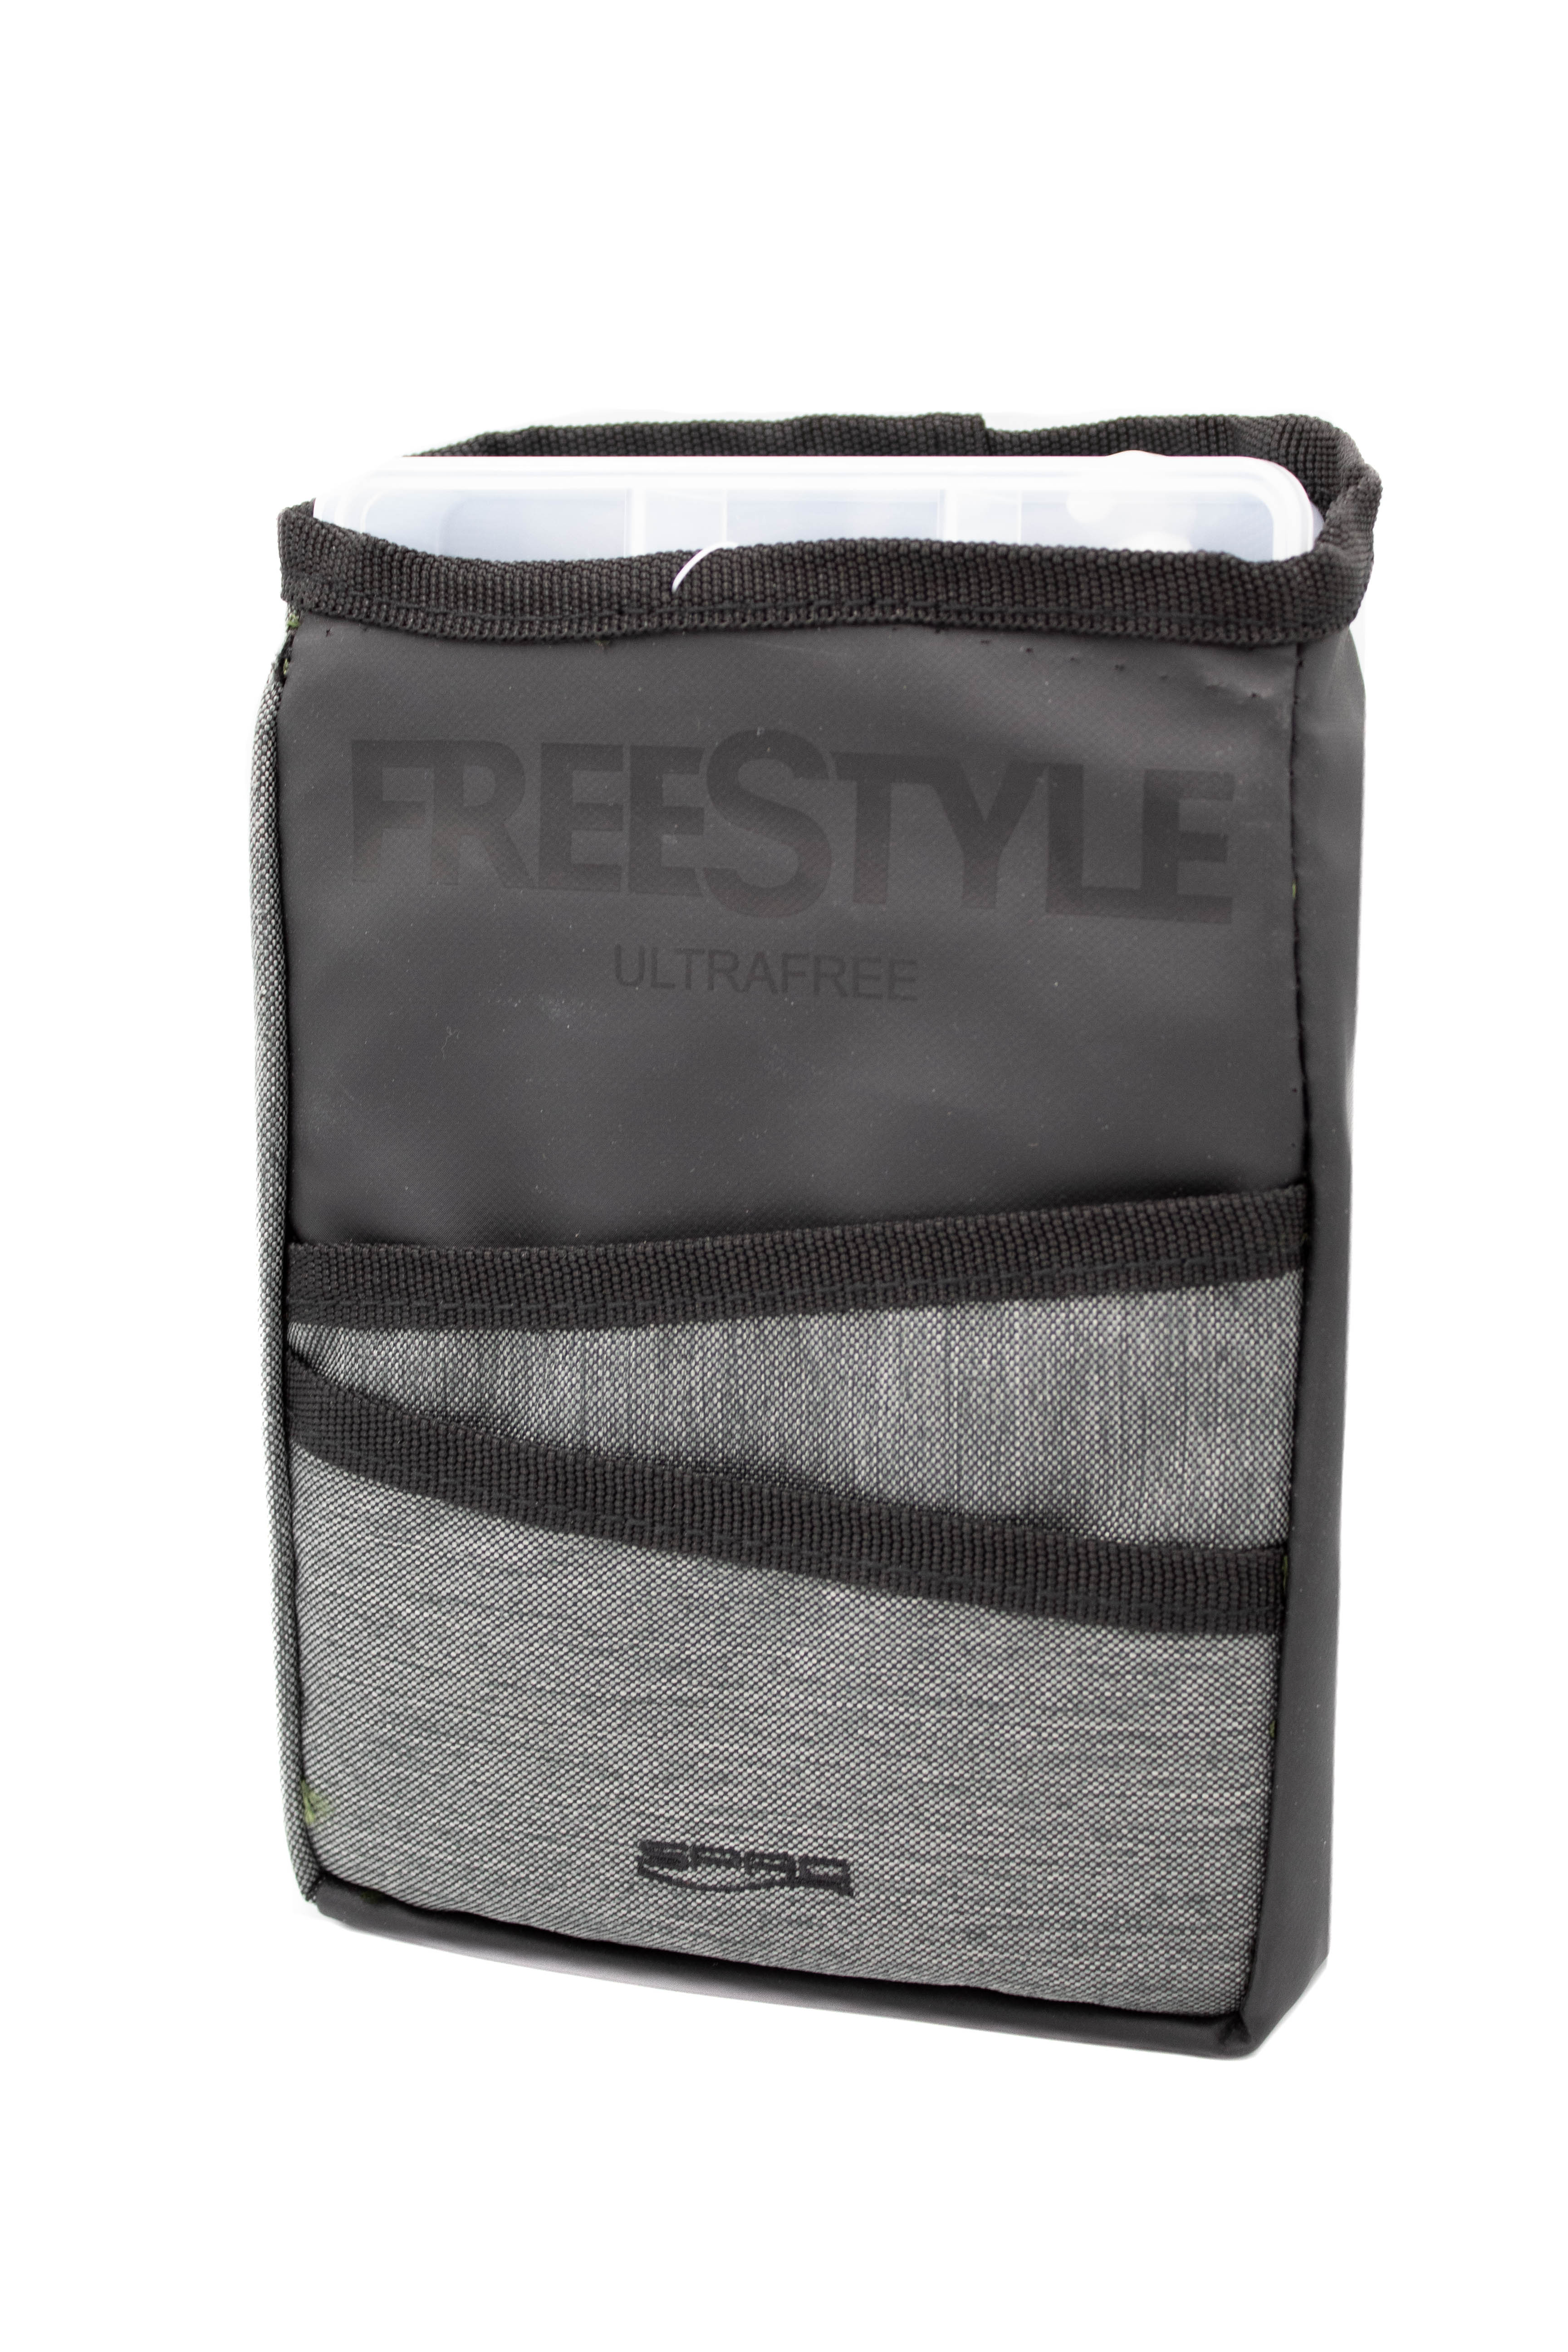 Сумка SPRO Freestyle Ultrafree box pouch - фото 1